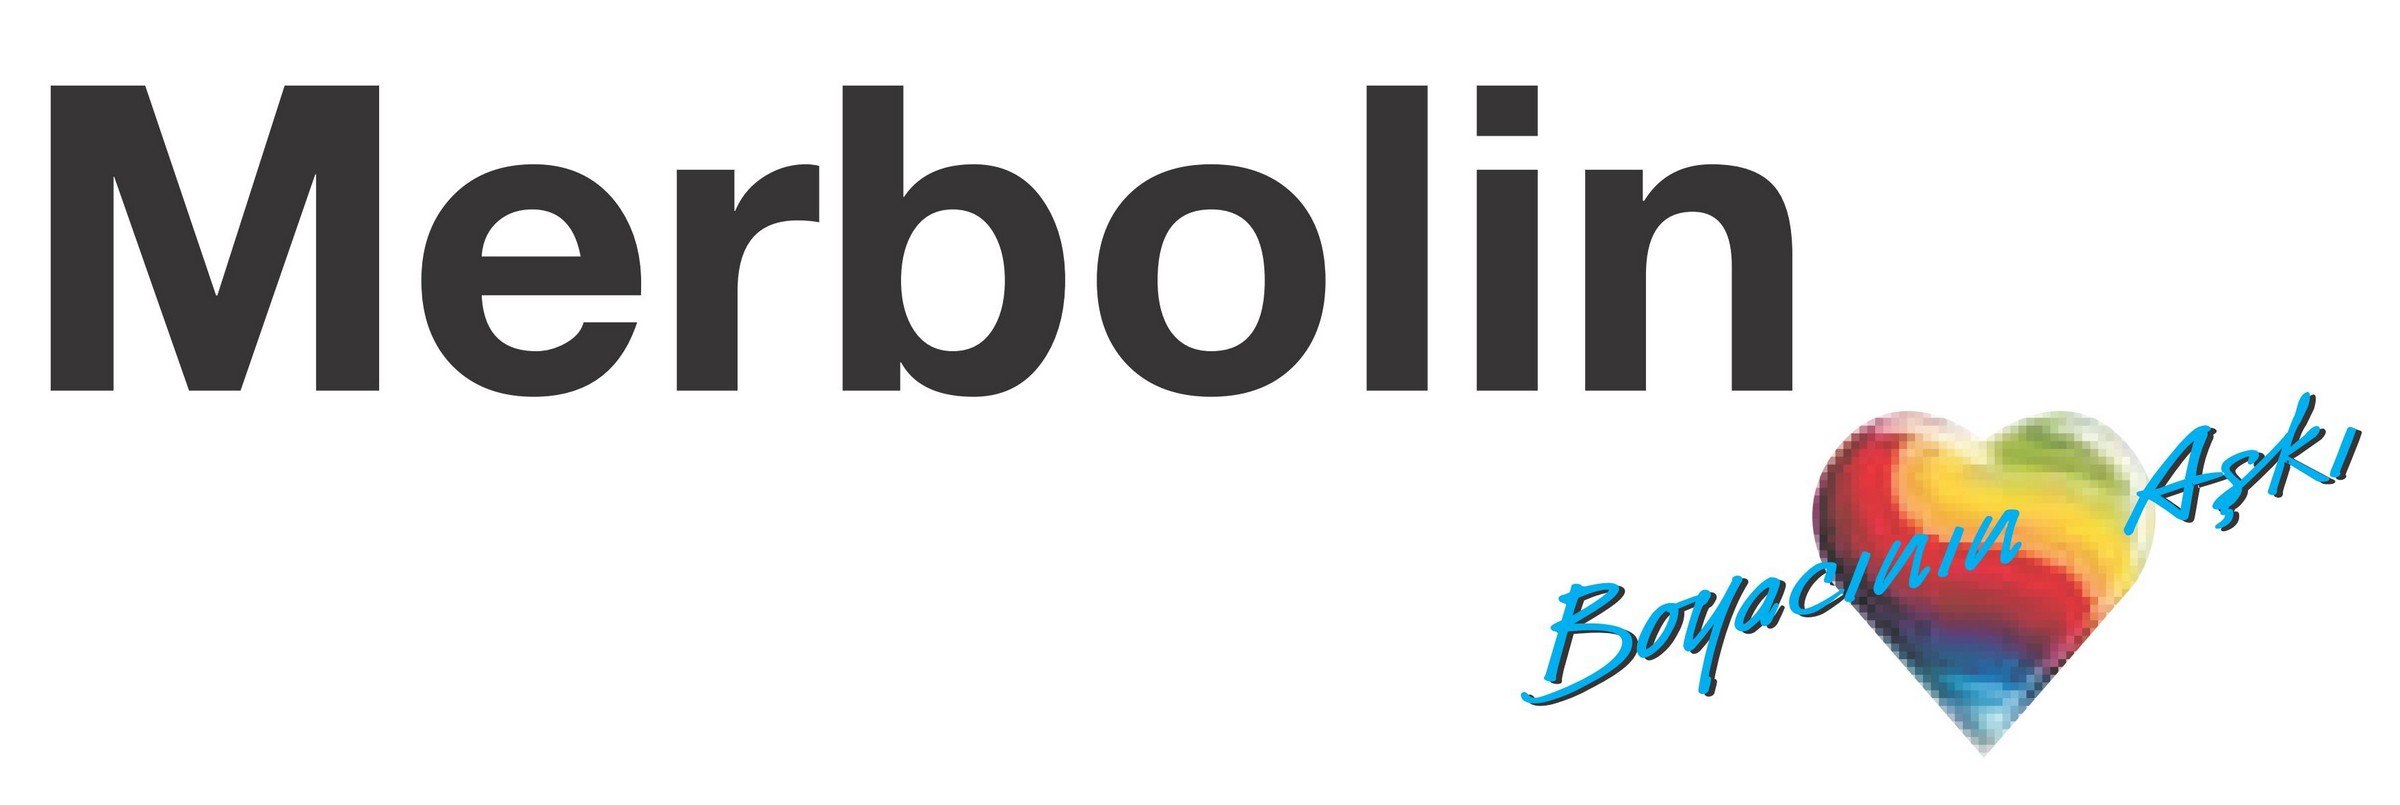 Merbolin Boya Logo png